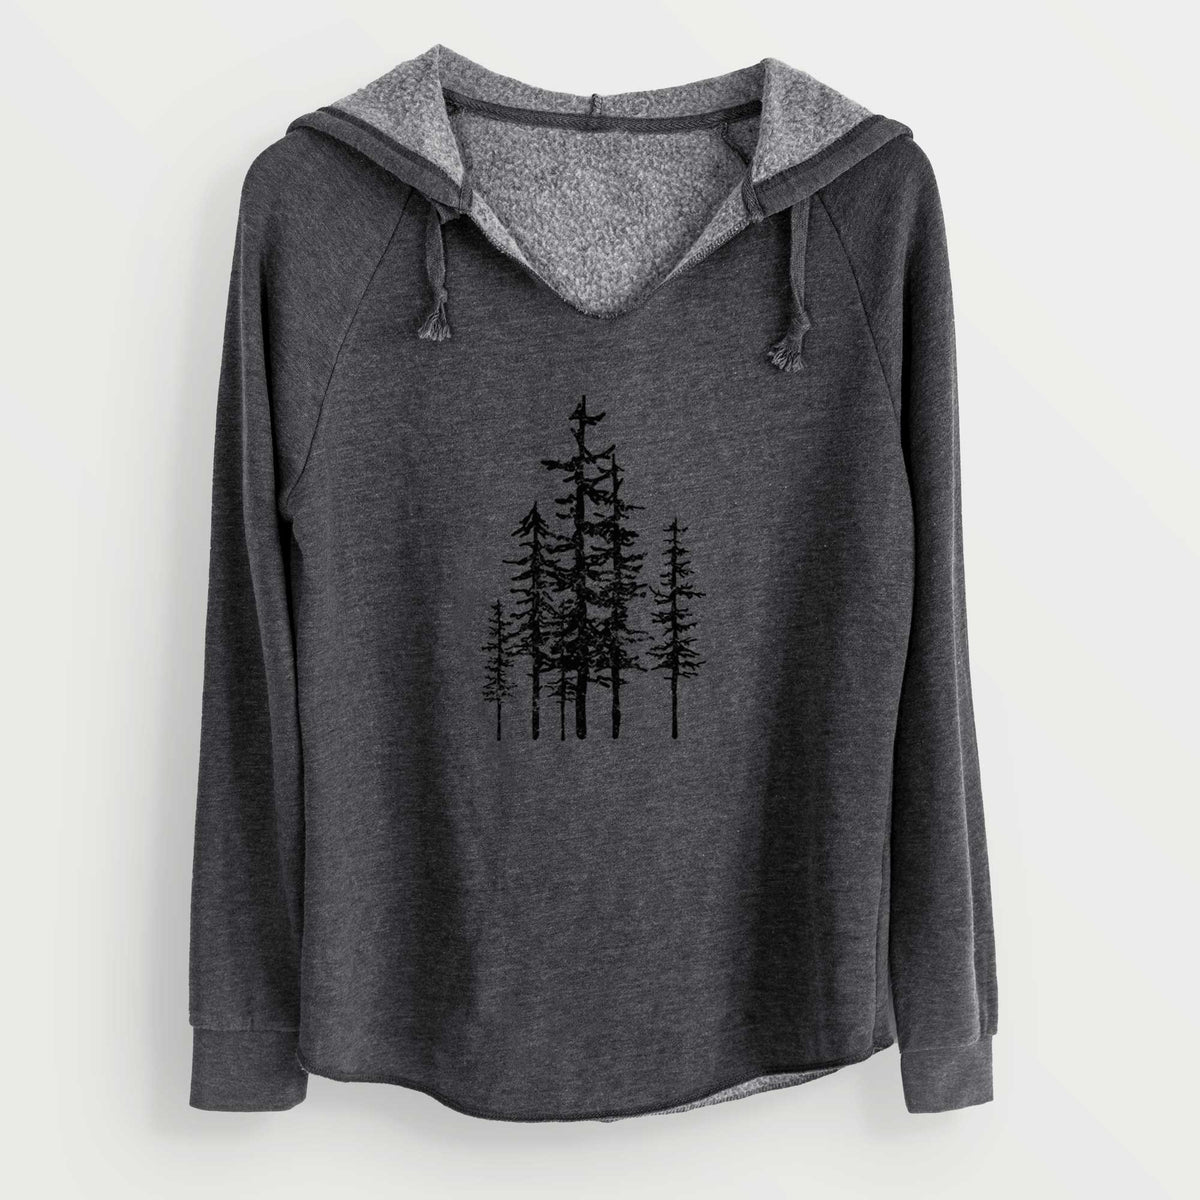 Evergreen Trees - Cali Wave Hooded Sweatshirt